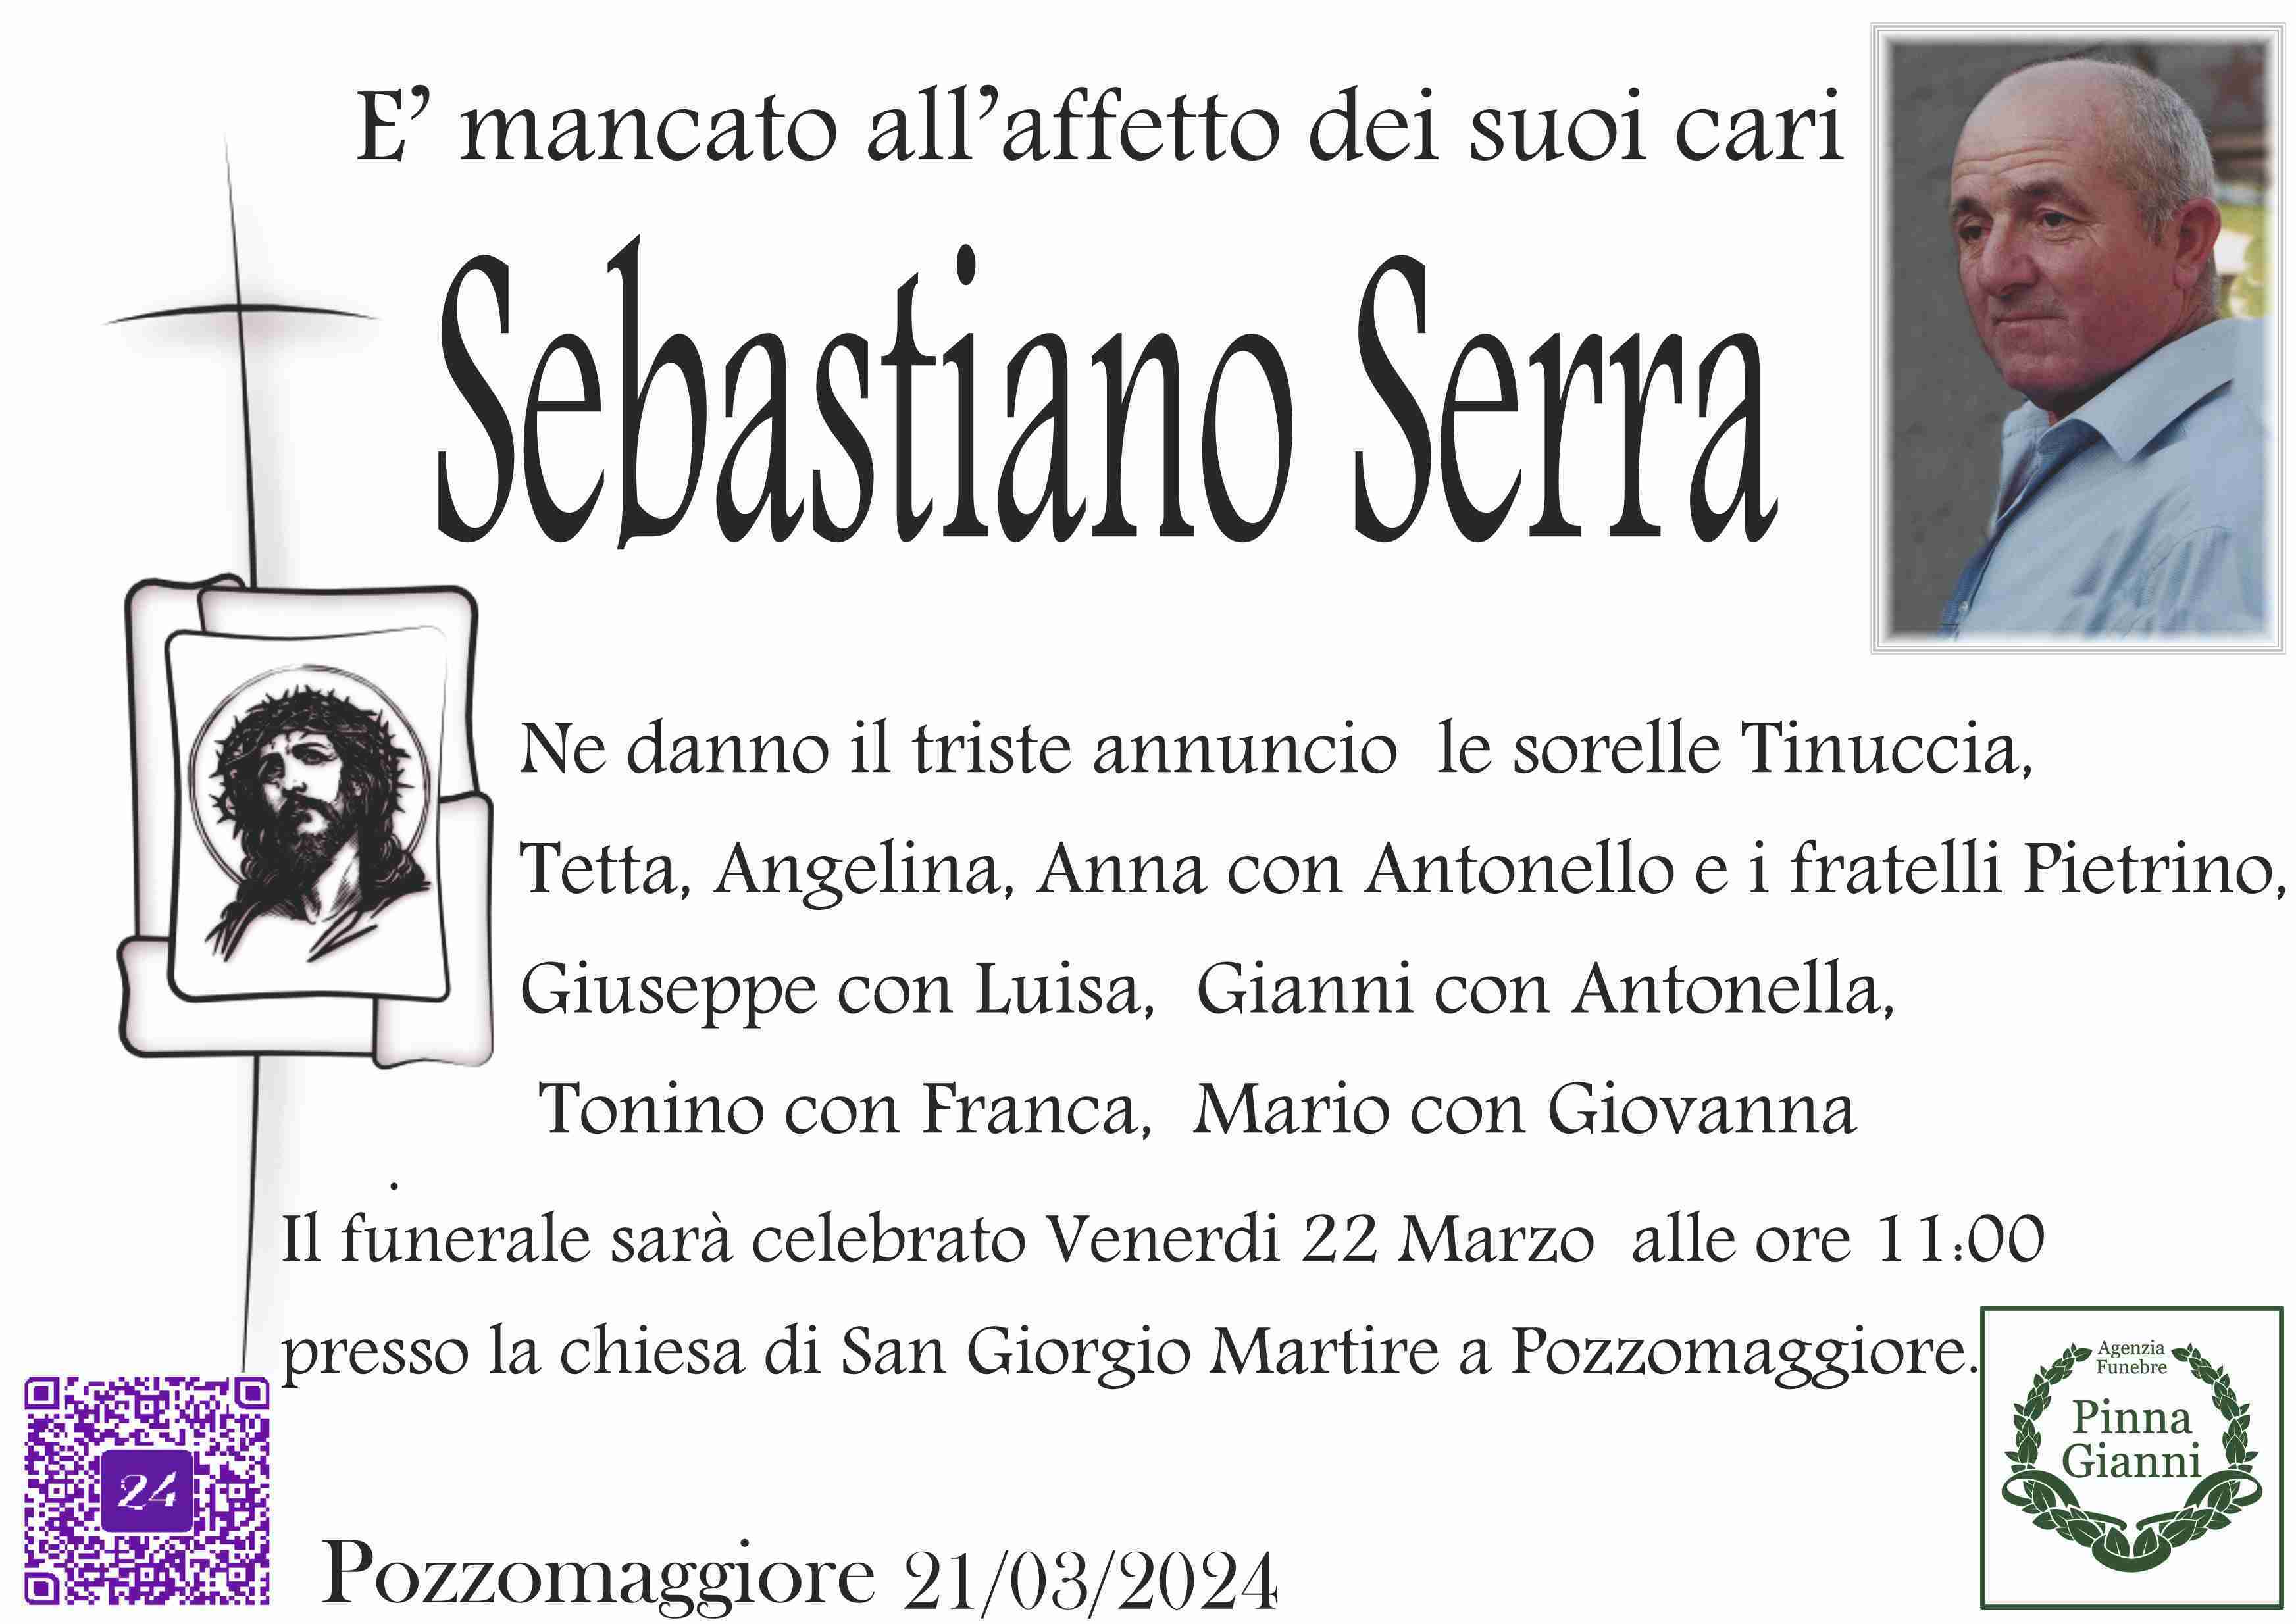 Sebastiano Serra